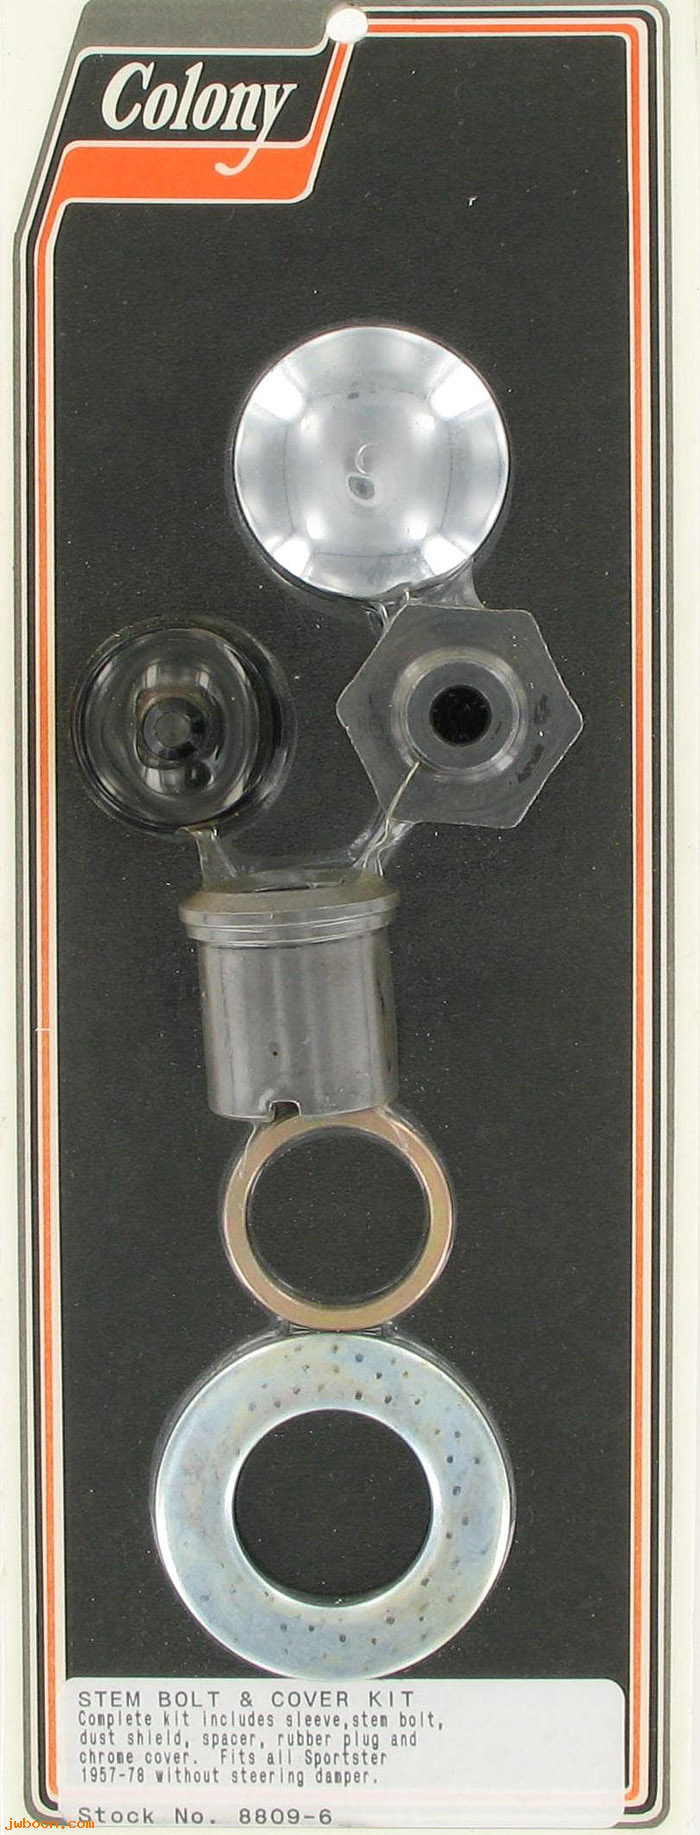 C 8809-6 (45721-54): Fork stem bolt and cover kit - XL '57-'78,without steering damper